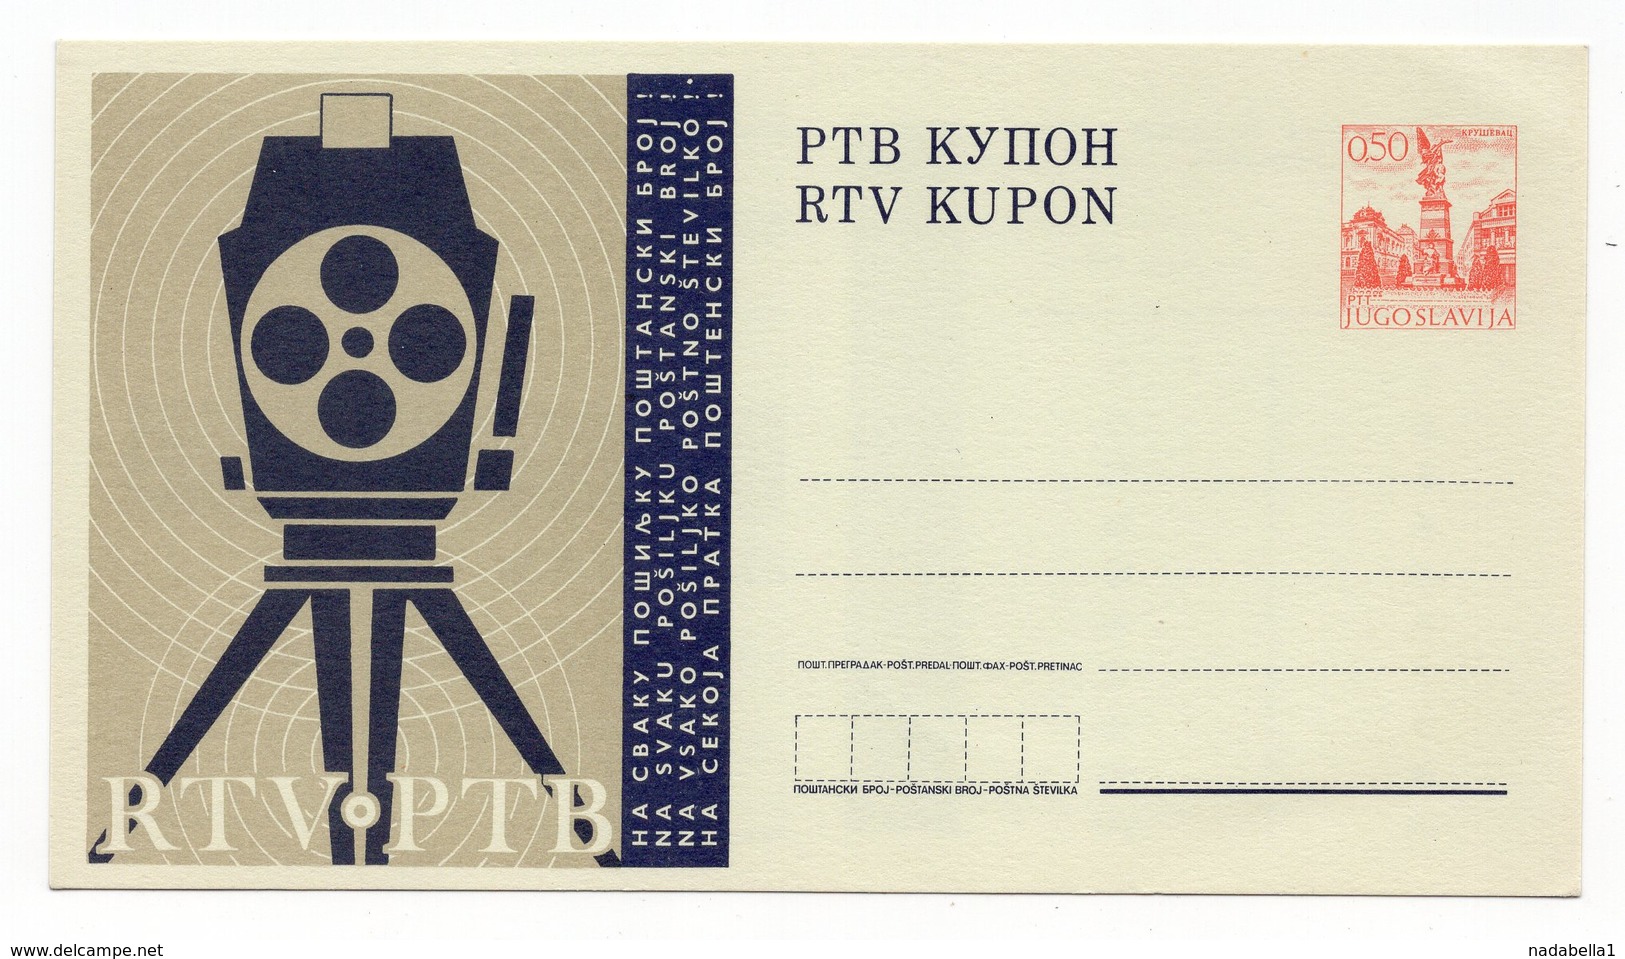 1970s YUGOSLAVIA, RTV KUPON, 1.20 DINAR, POSTAL STATIONERY, NOT USED, VOTING CARD - Postal Stationery